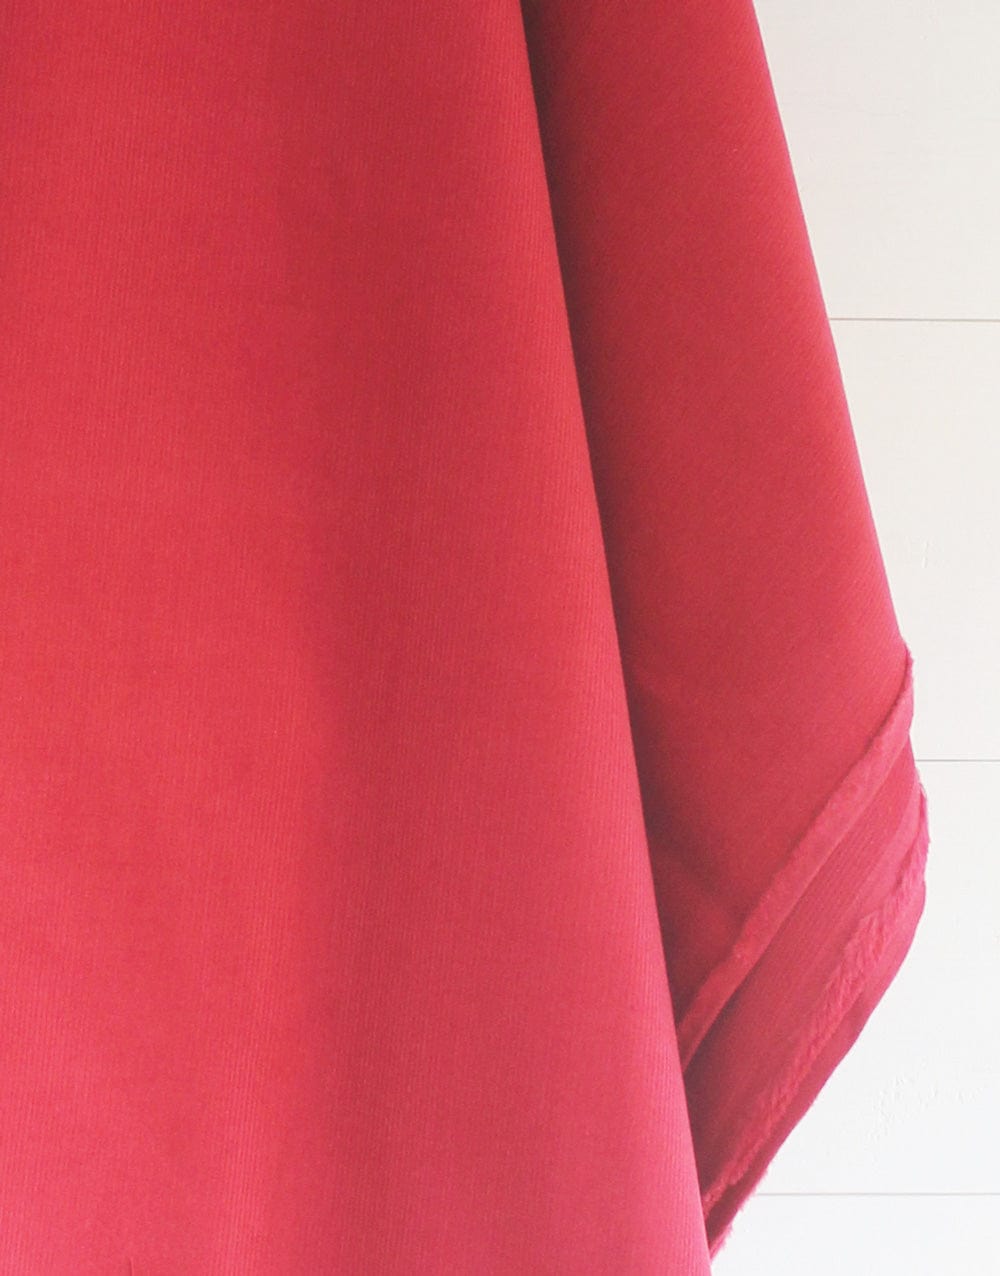 Red Cotton Baby Corduroy Fabric | Clothkits